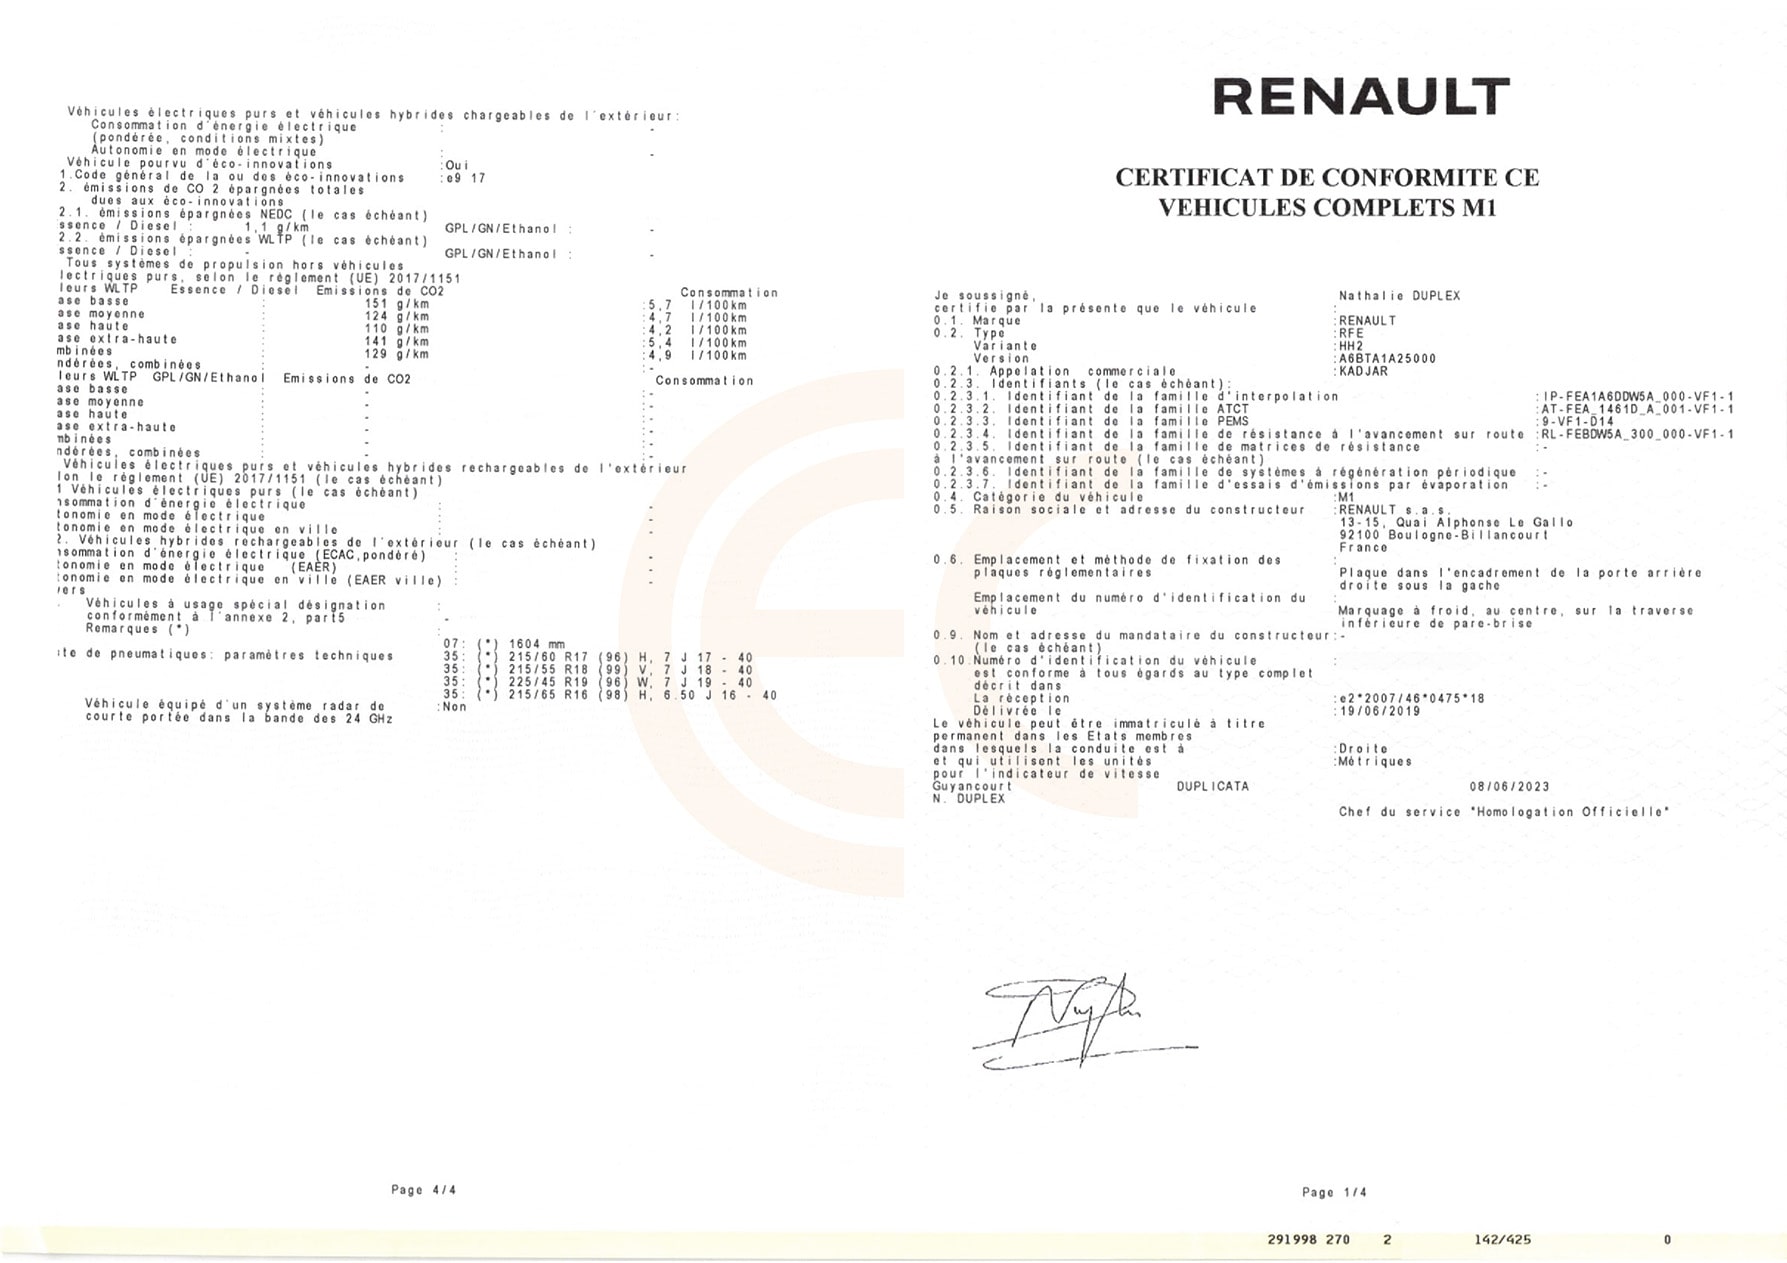 Příklad dokumentu COC pro vůz Renault.